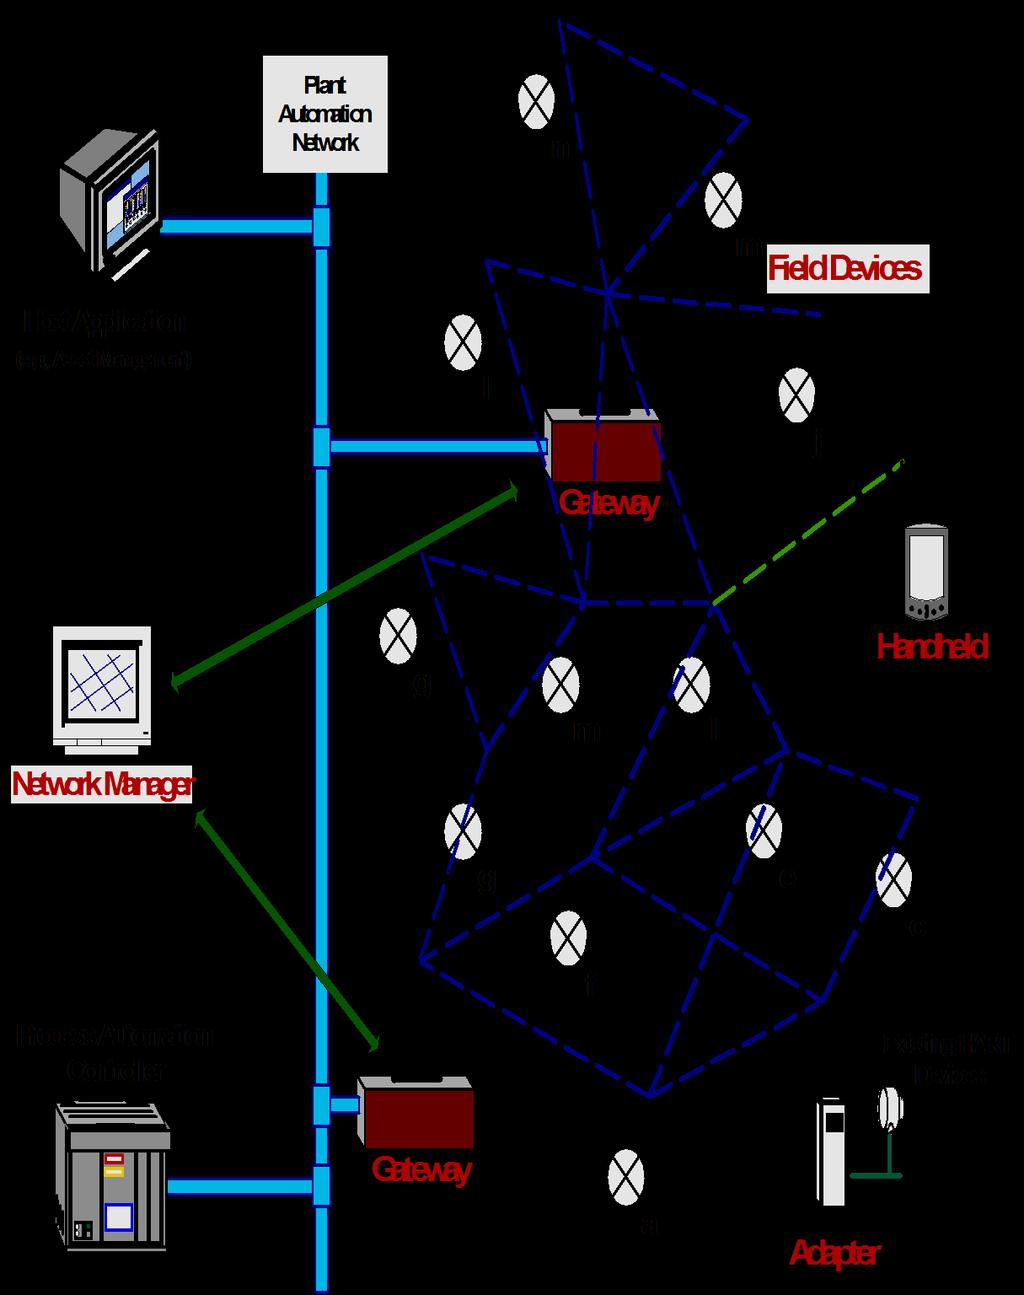 Mesh Network in Industrial Network Self Organizing & Self Healing Wireless Mesh Network 높은 신뢰성 보장 매쉬 네트워크 환경으로 여러